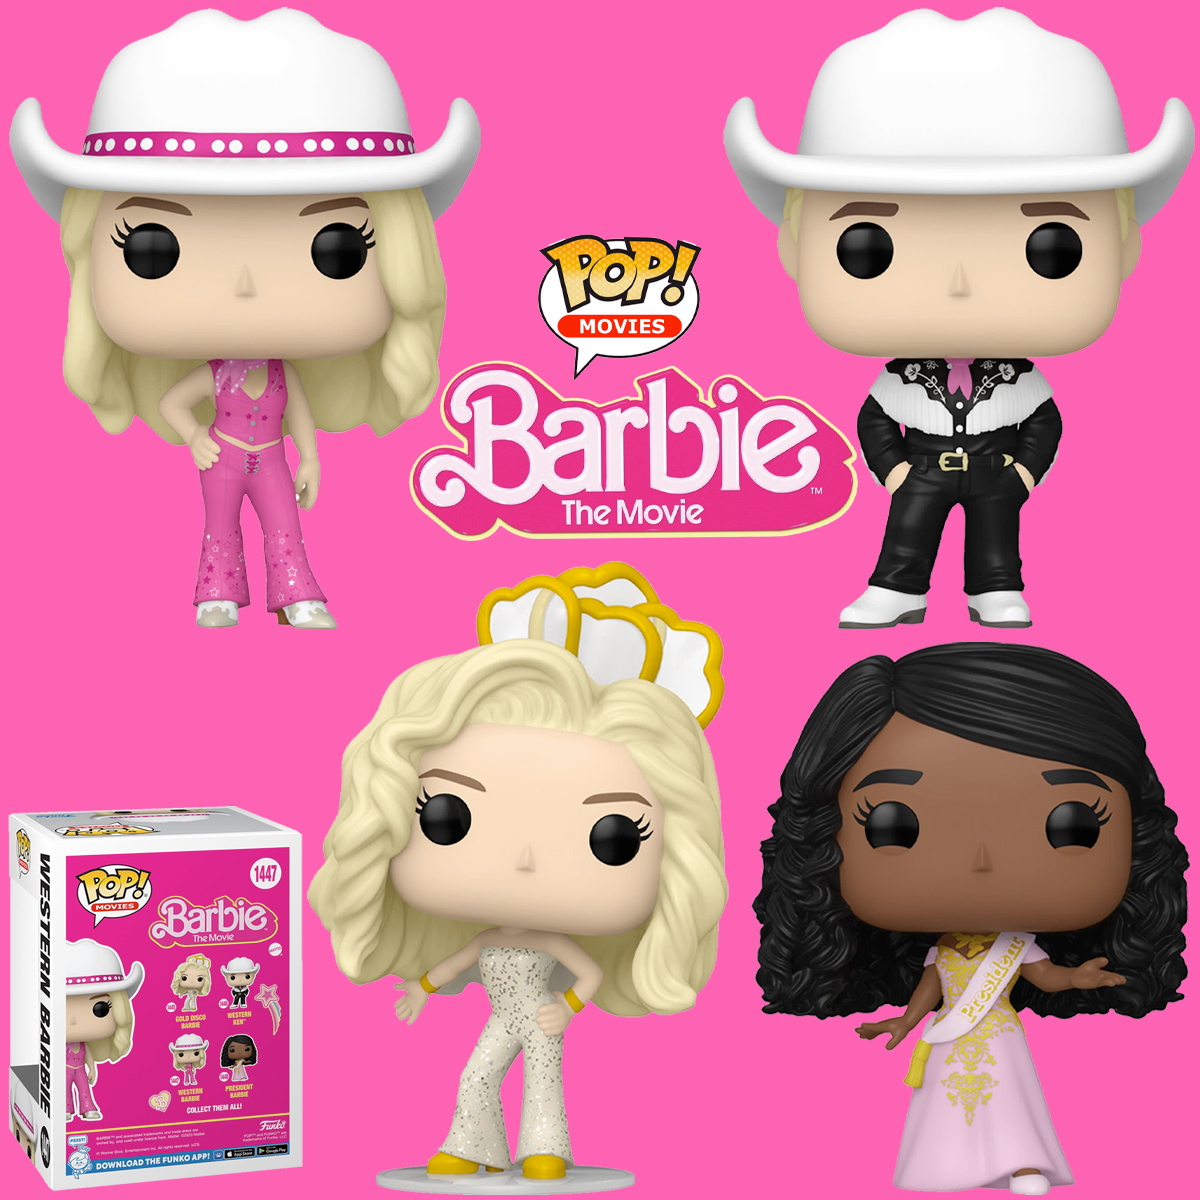 Bonecas Funko Pop! Barbie The Movie